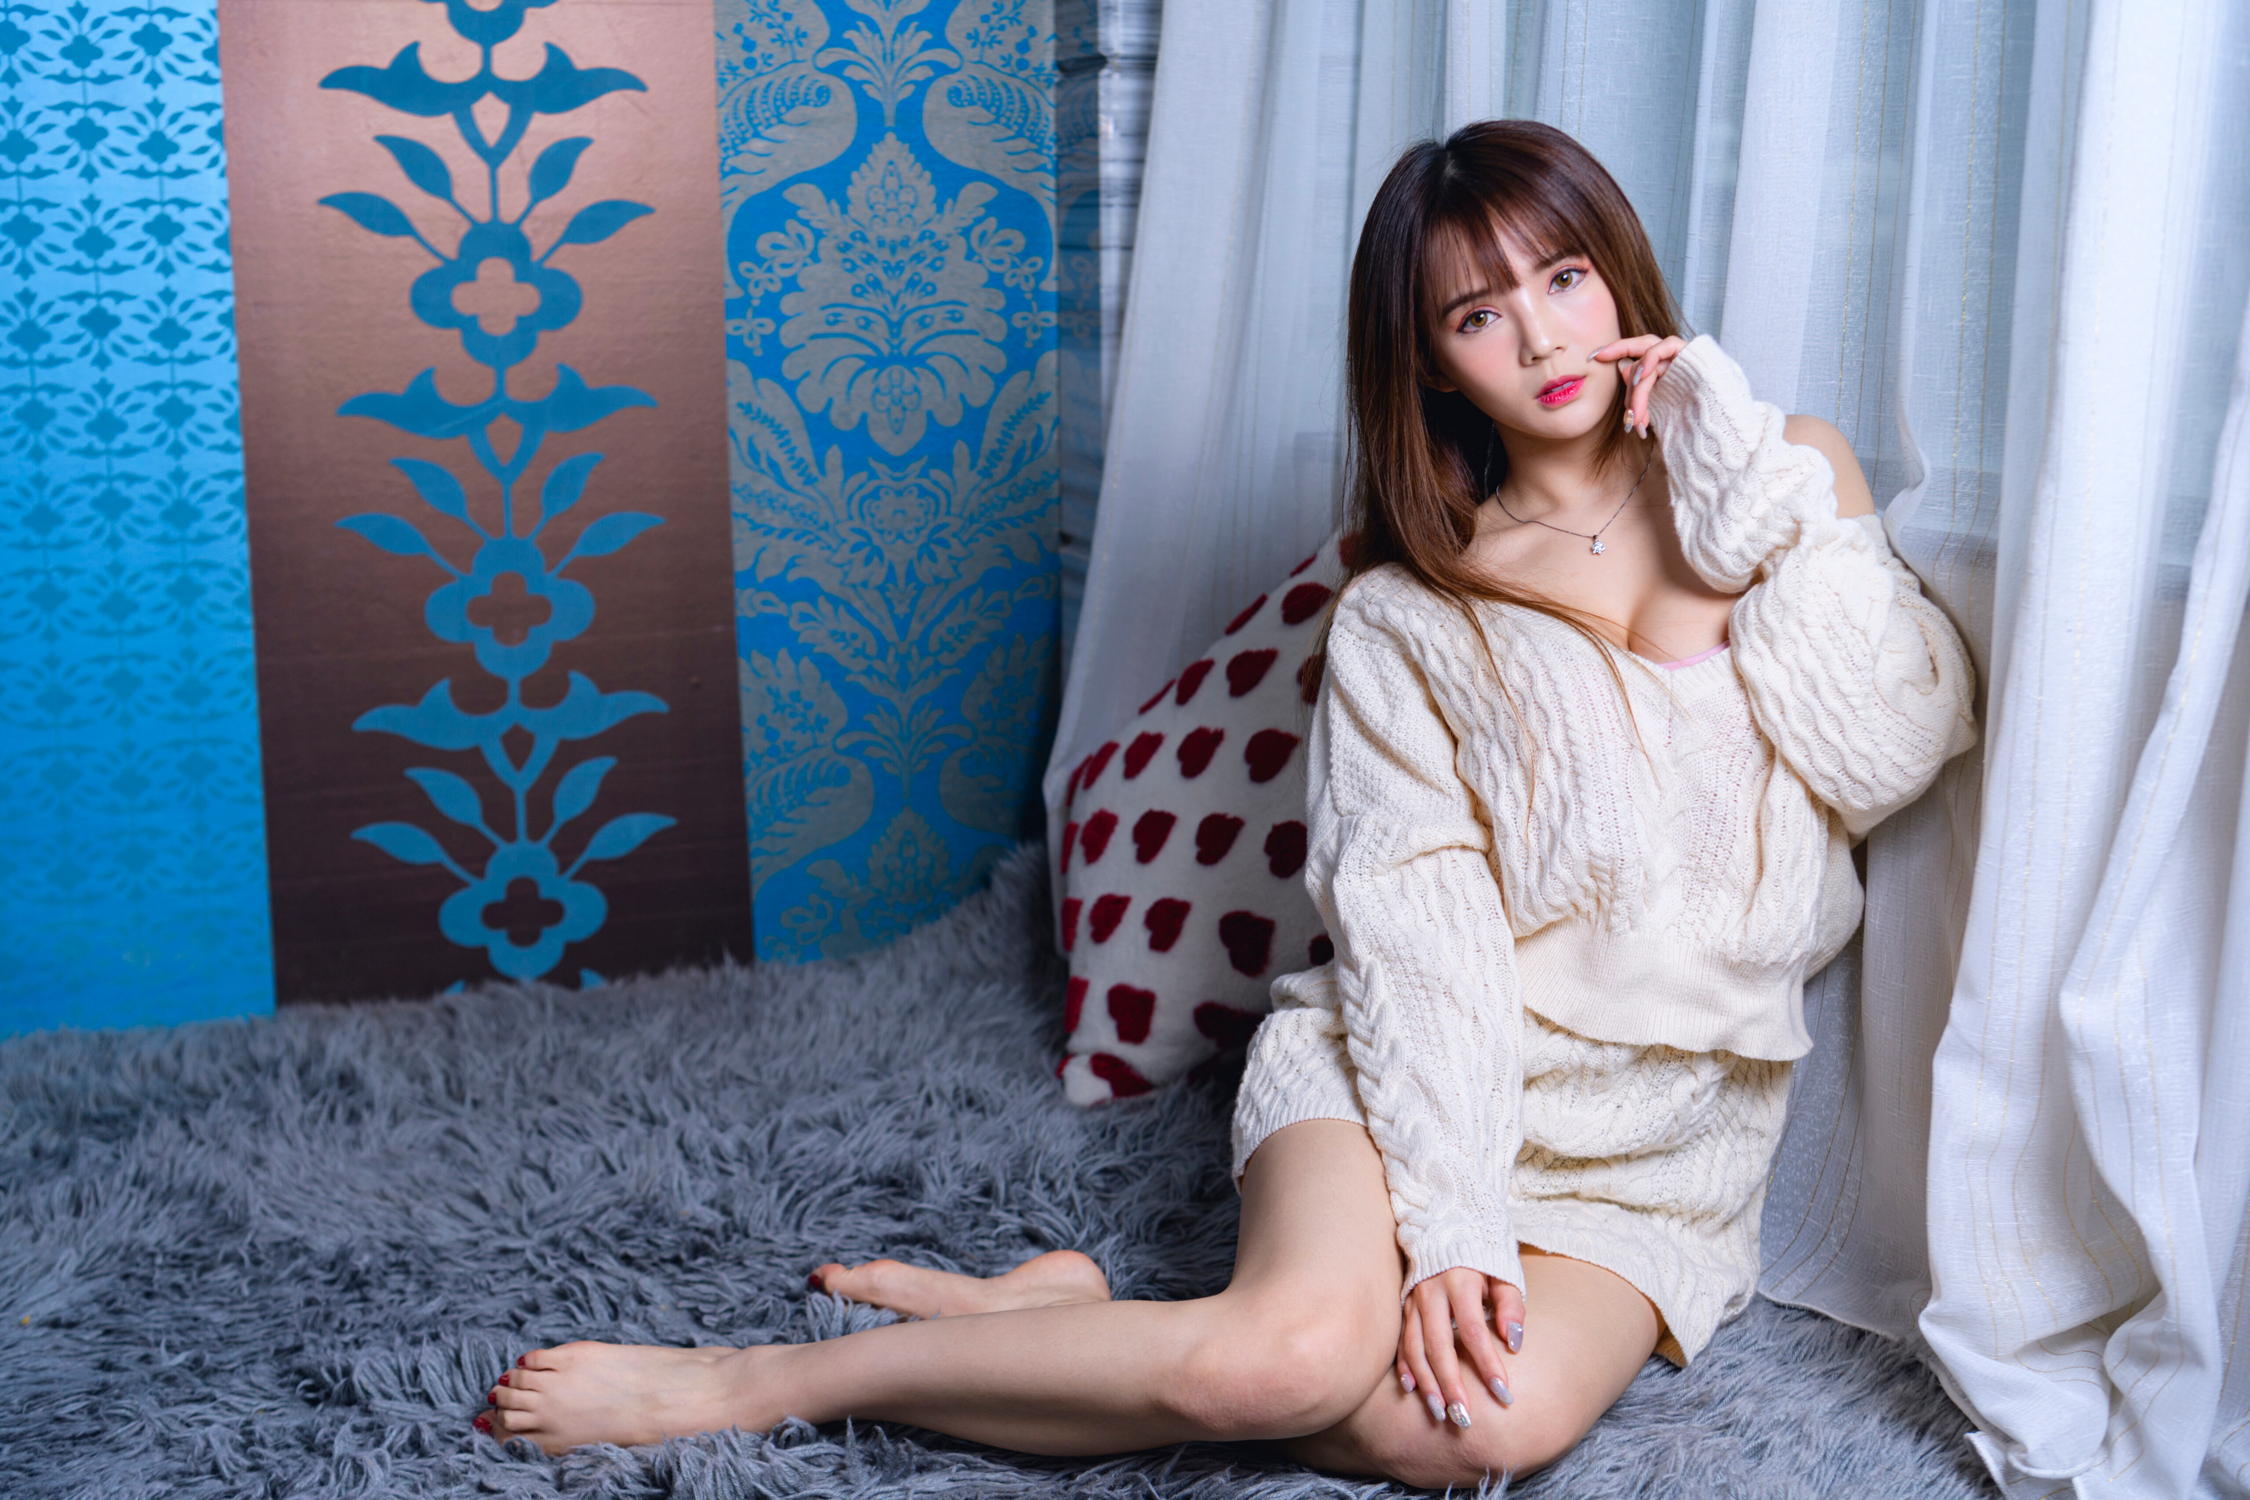 Asian Model Women Long Hair Dark Hair Sitting Carpet Pillow Curtains Barefoot Pullover Necklace Skir 2250x1500